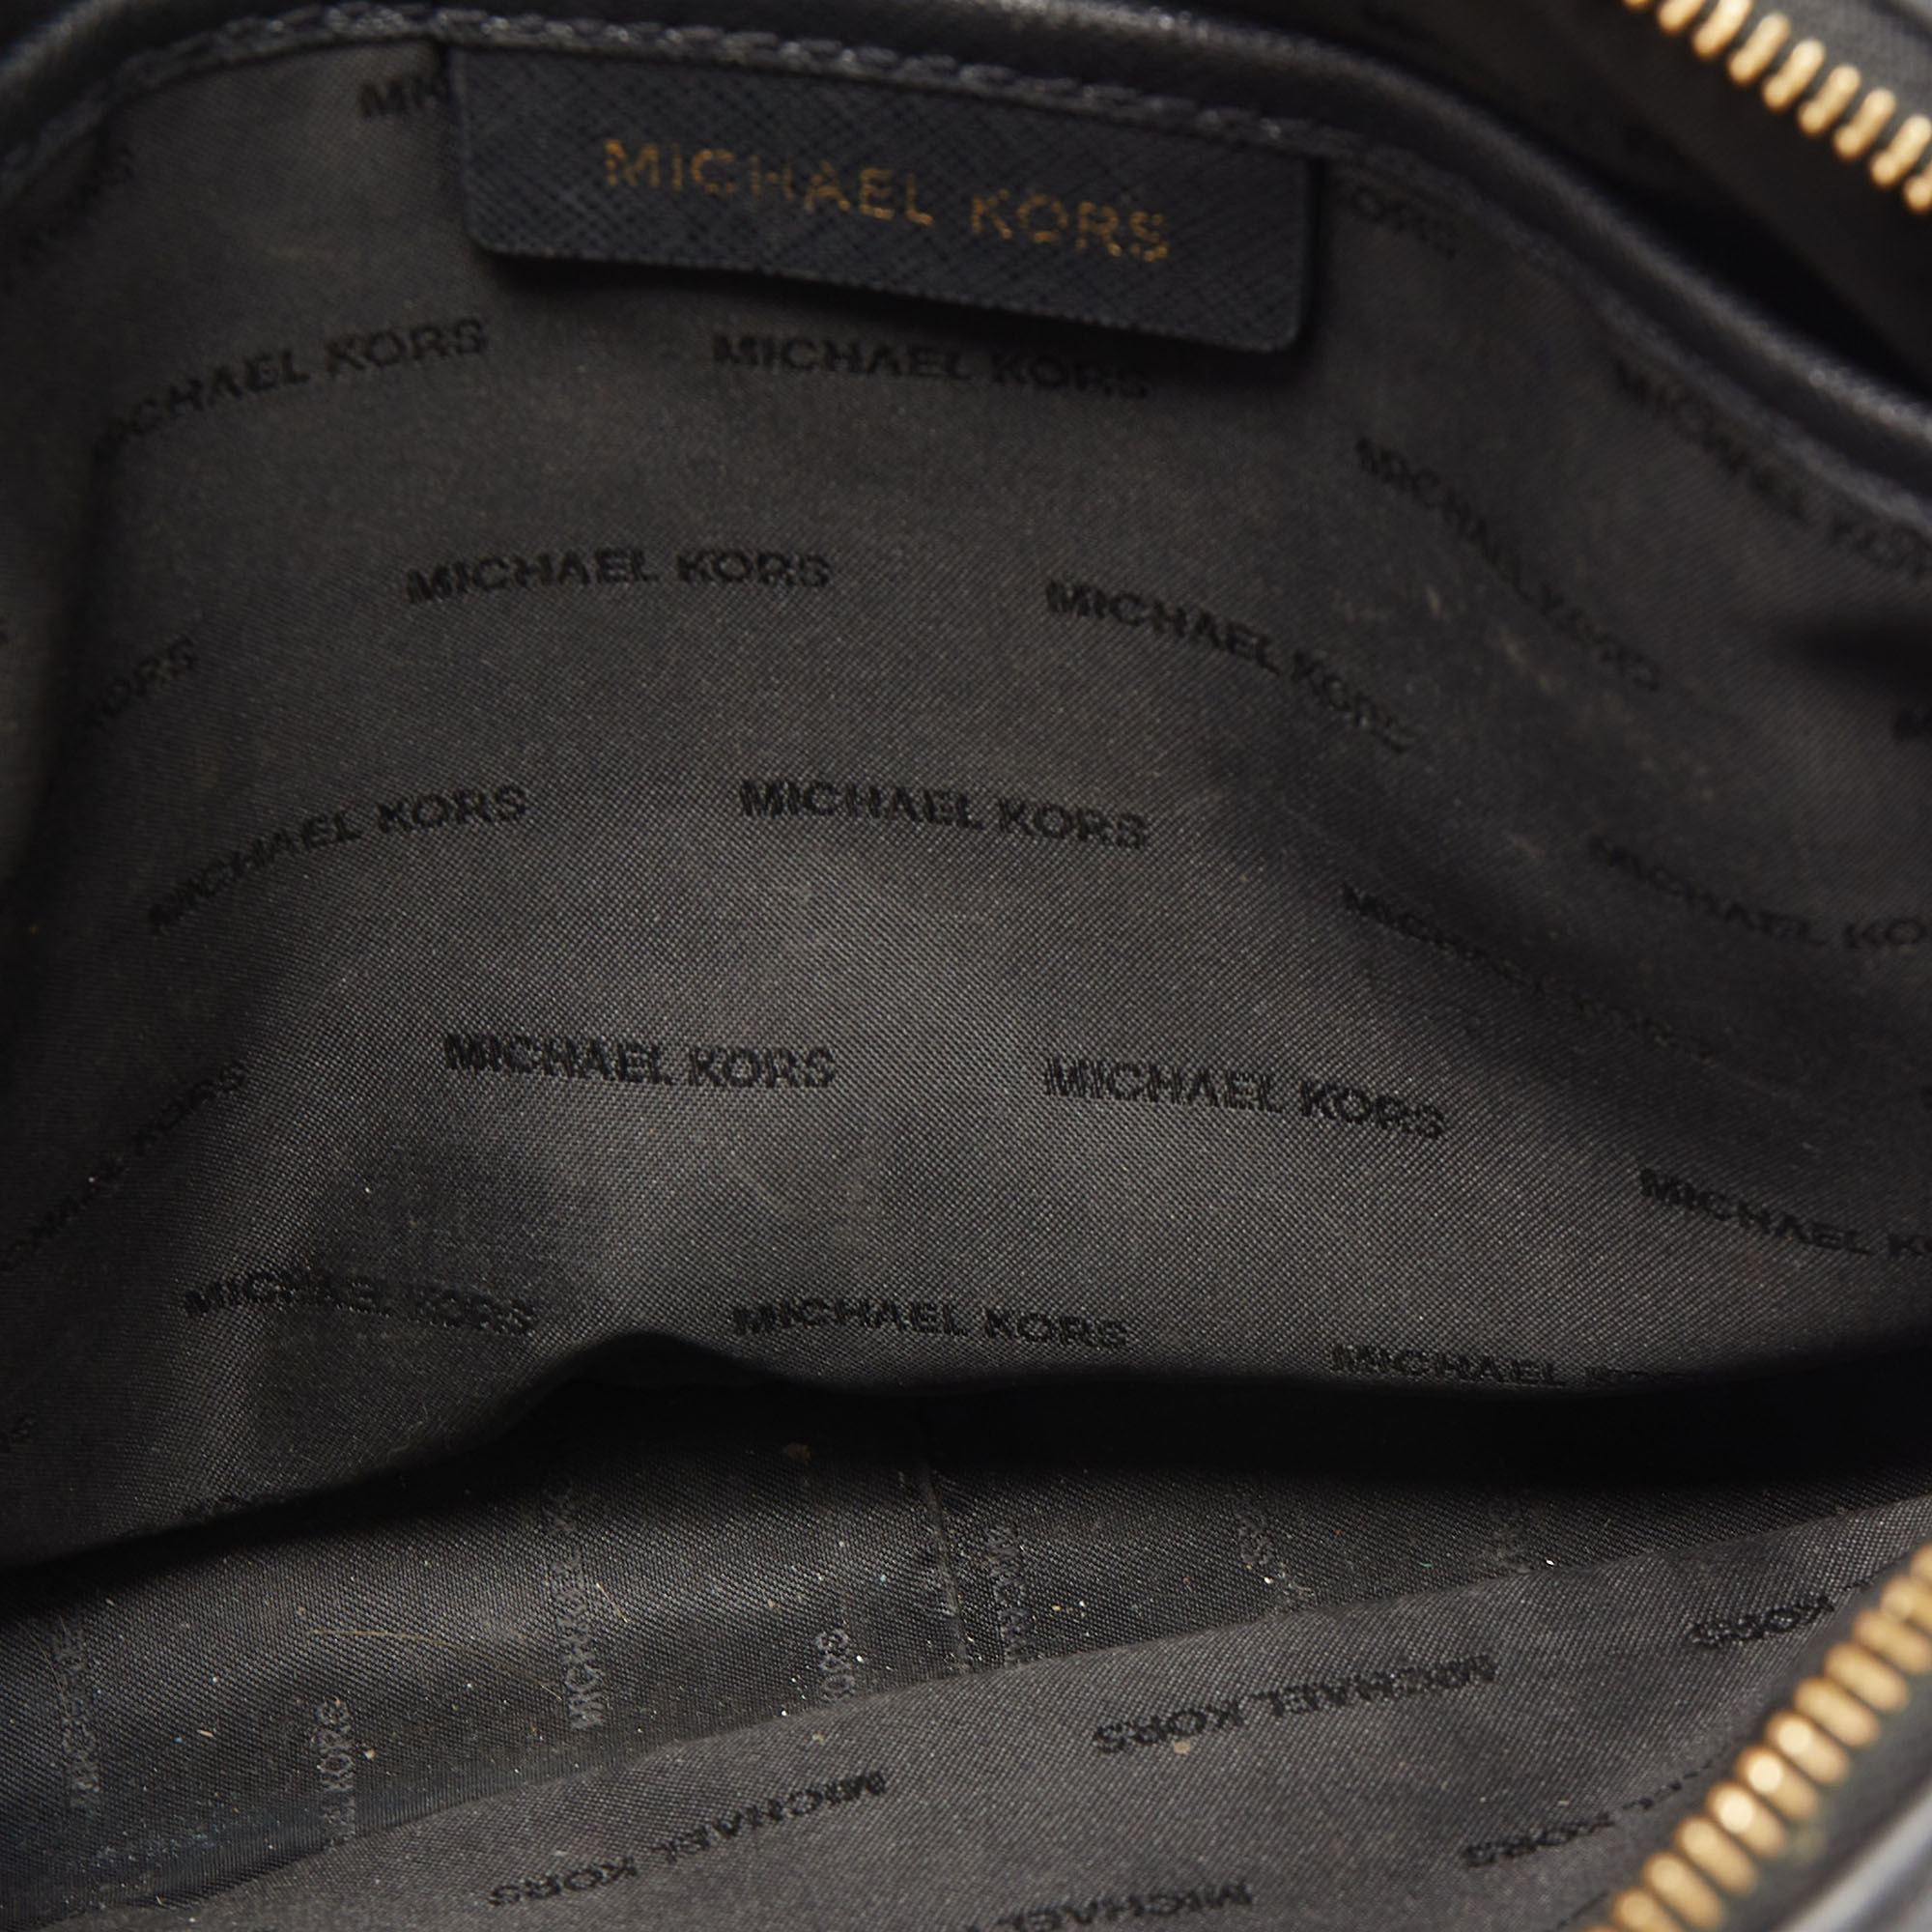 Michael Kors Black Saffiano Leather Jet Set Camera Crossbody Bag